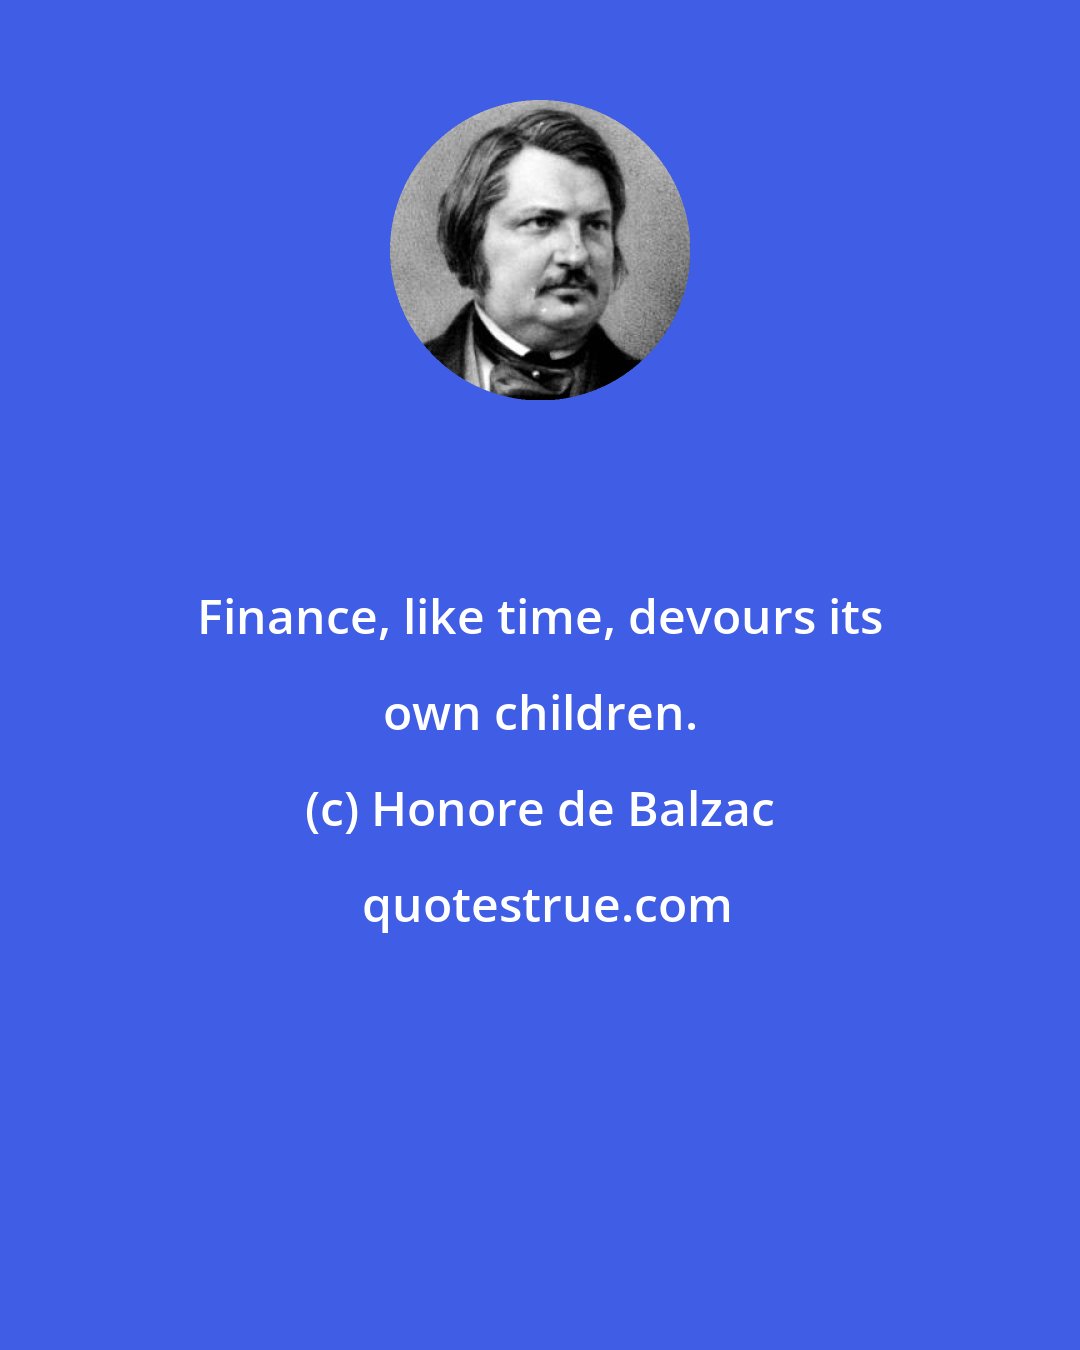 Honore de Balzac: Finance, like time, devours its own children.